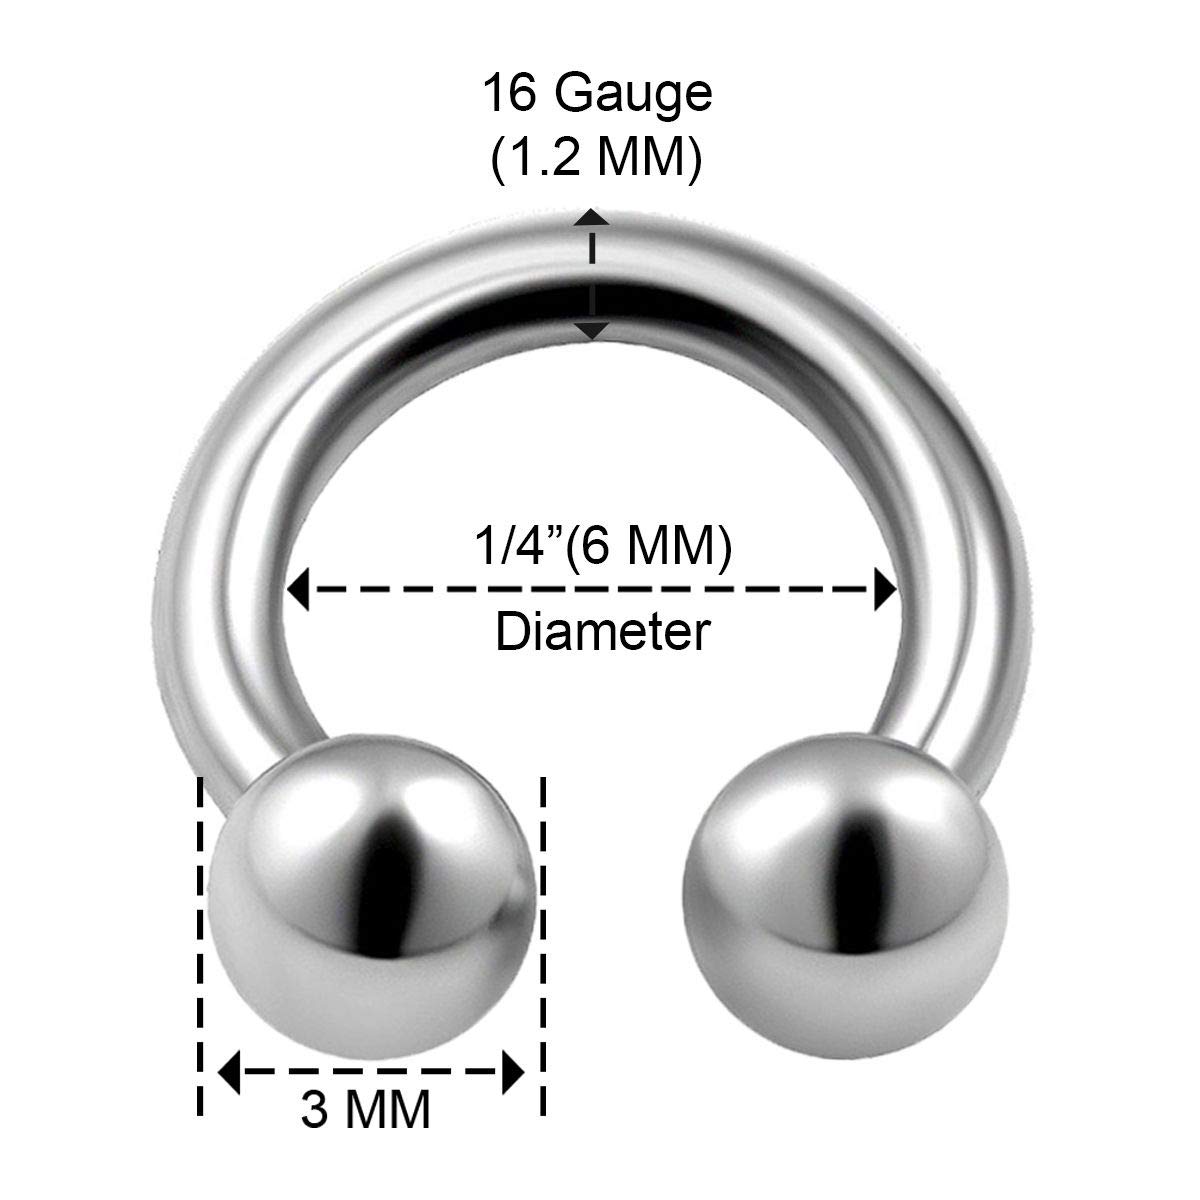 6PCS Stainless Steel Horseshoe Ring 16 gauge 6mm 8mm 10mm 3mm Ball Spike Eyebrow Lobe Earrings Septum Piercing Jewelry 0261